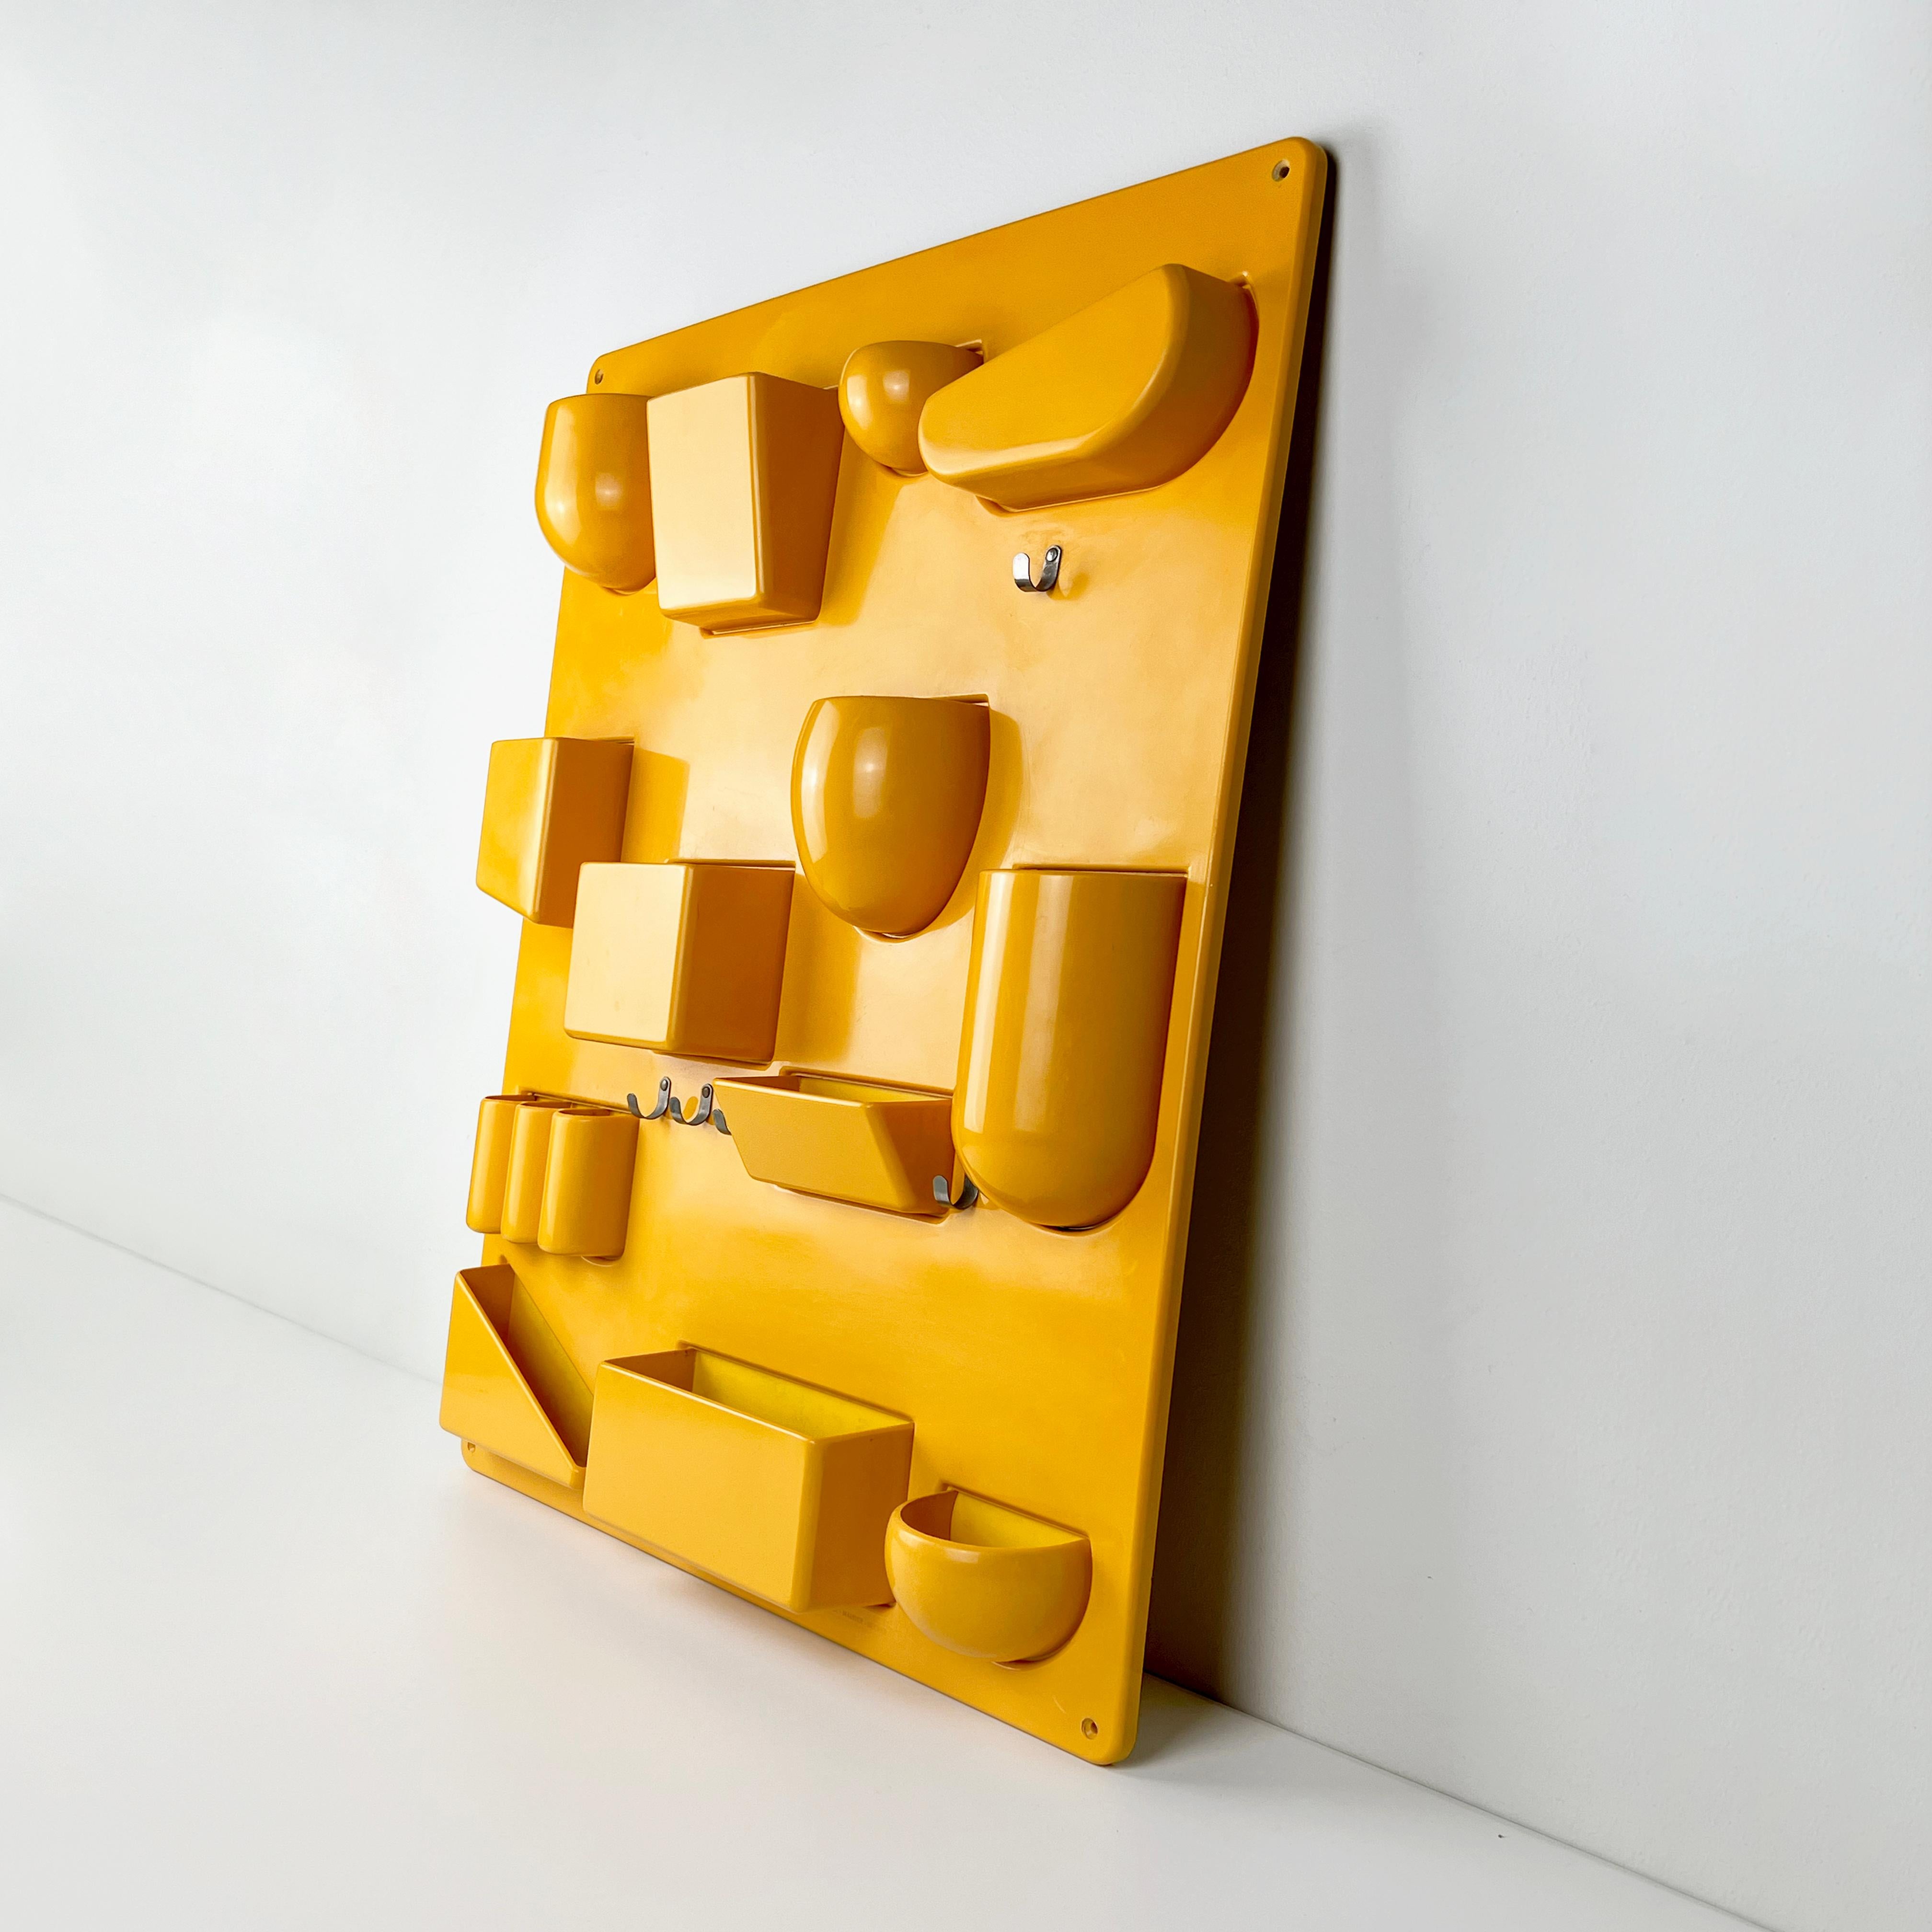 German Yellow “Utensilo” Plastic Wall Storage Unit designed by Dorothee Maurer Becker 